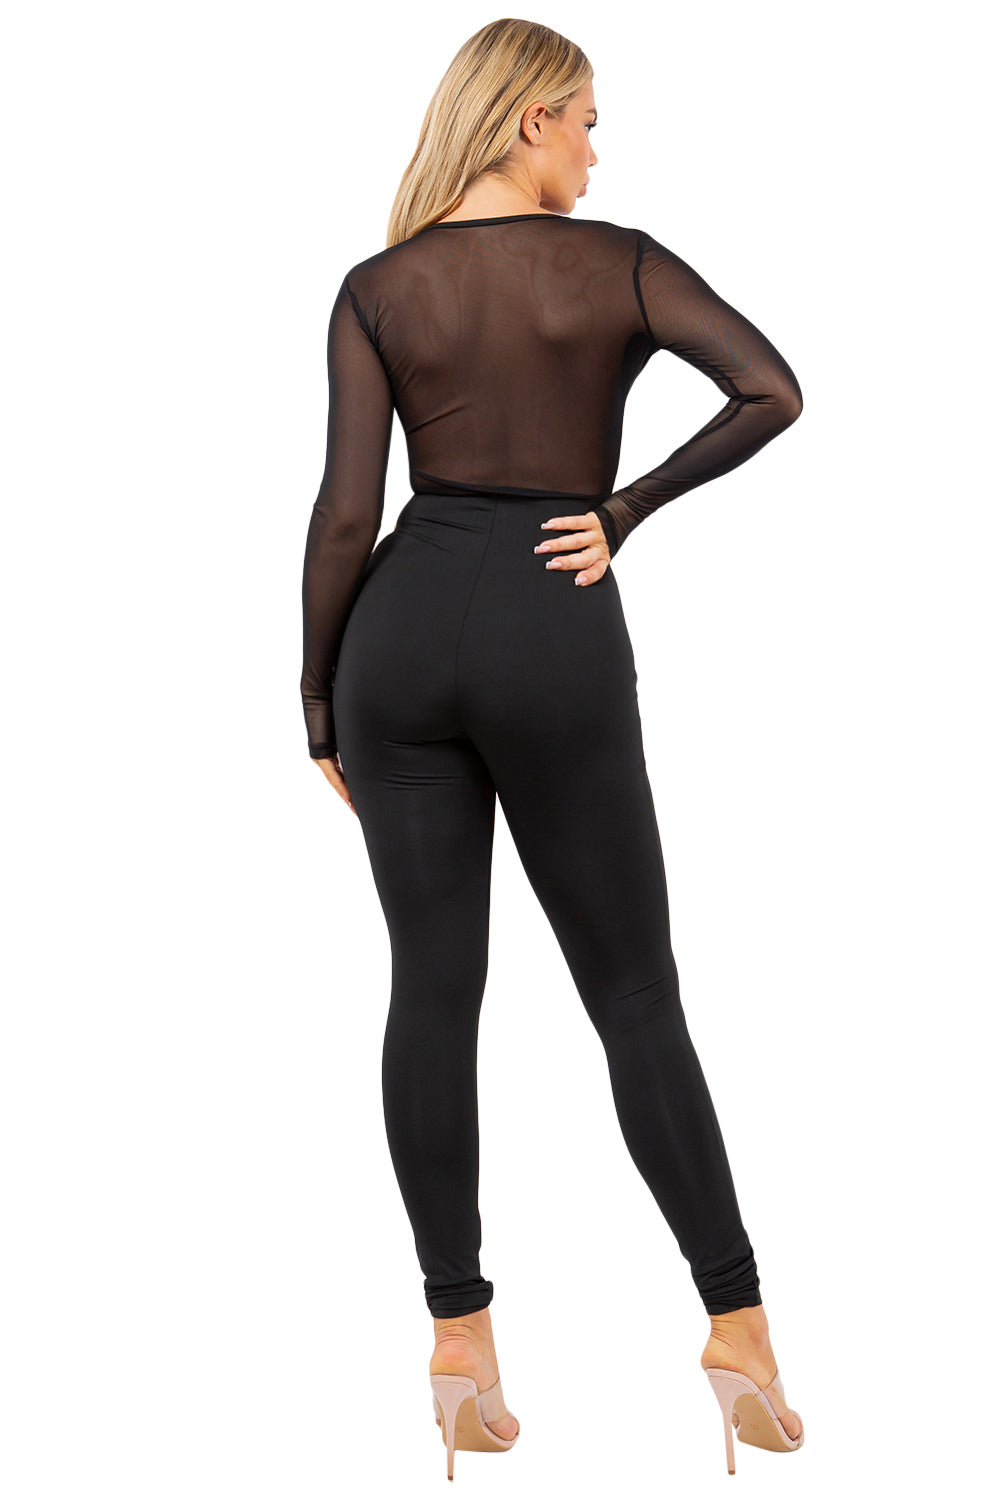 Women's Elegant Stretch Long Sleeve Jumpsuit with Sheer Mesh Details and Front Zipper V-Neck Design